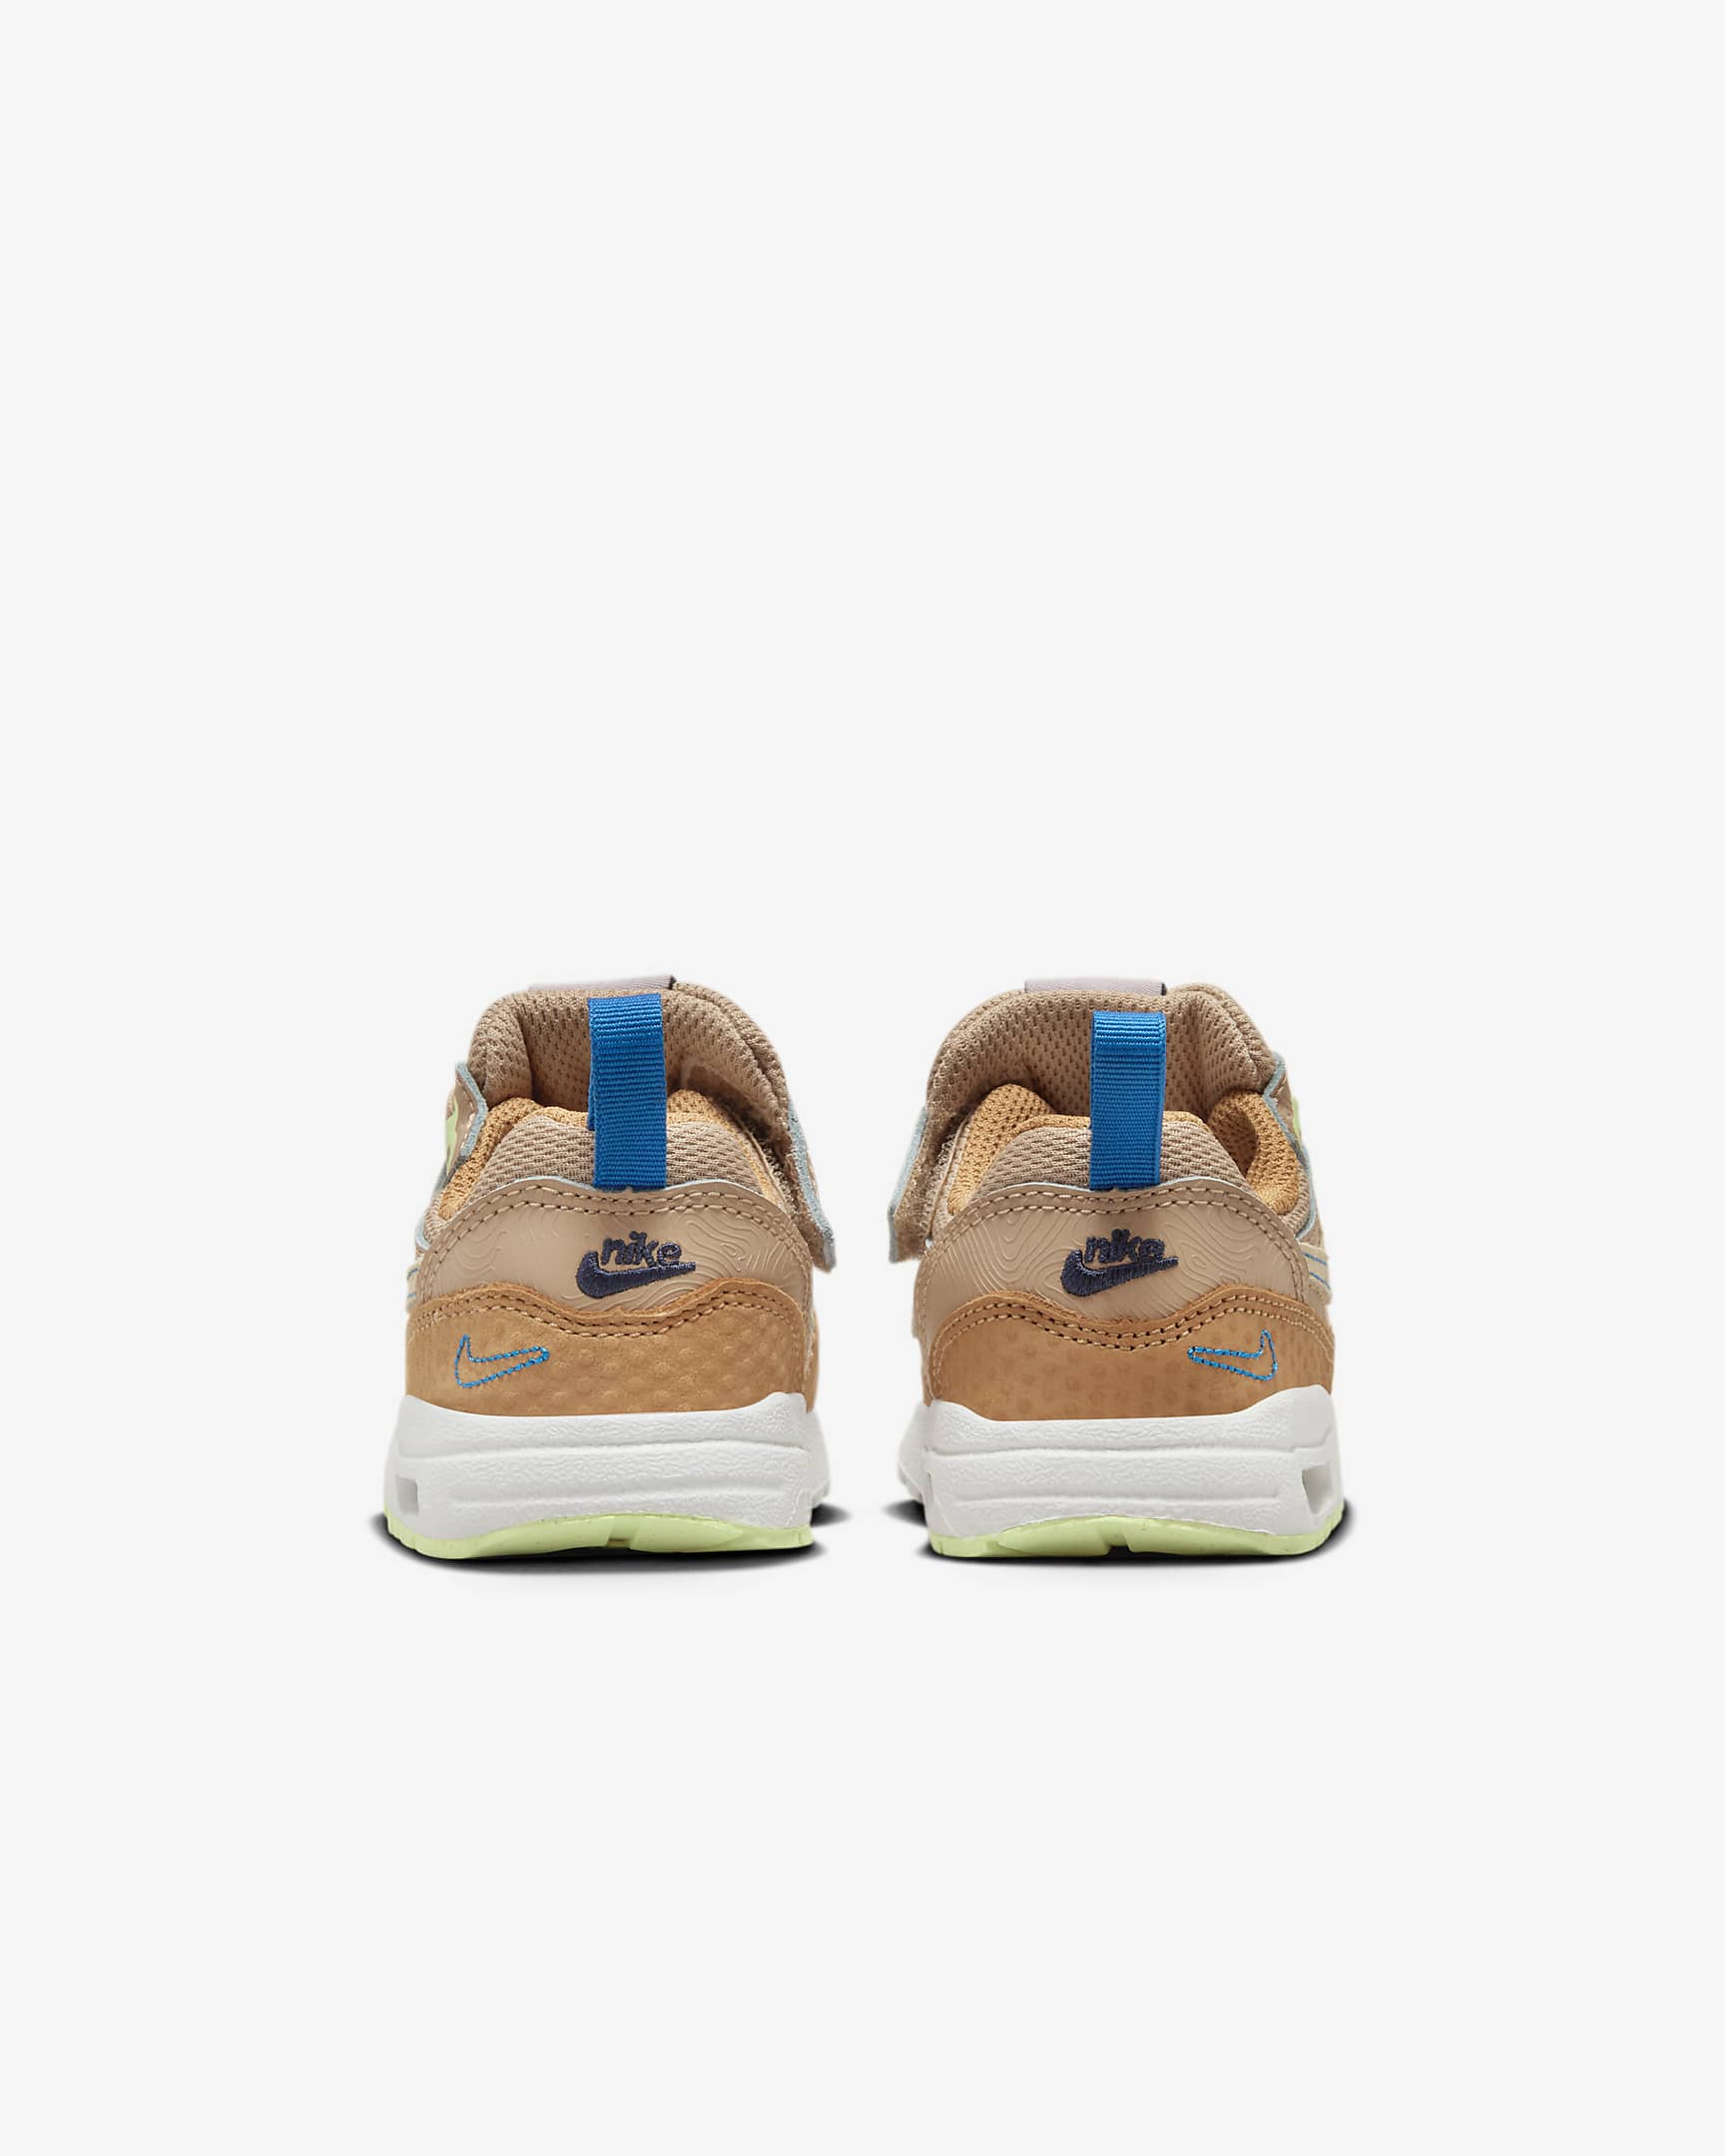 Nike Air Max 1 SE EasyOn-sko til babyer/småbørn - Hemp/Flax/Coconut Milk